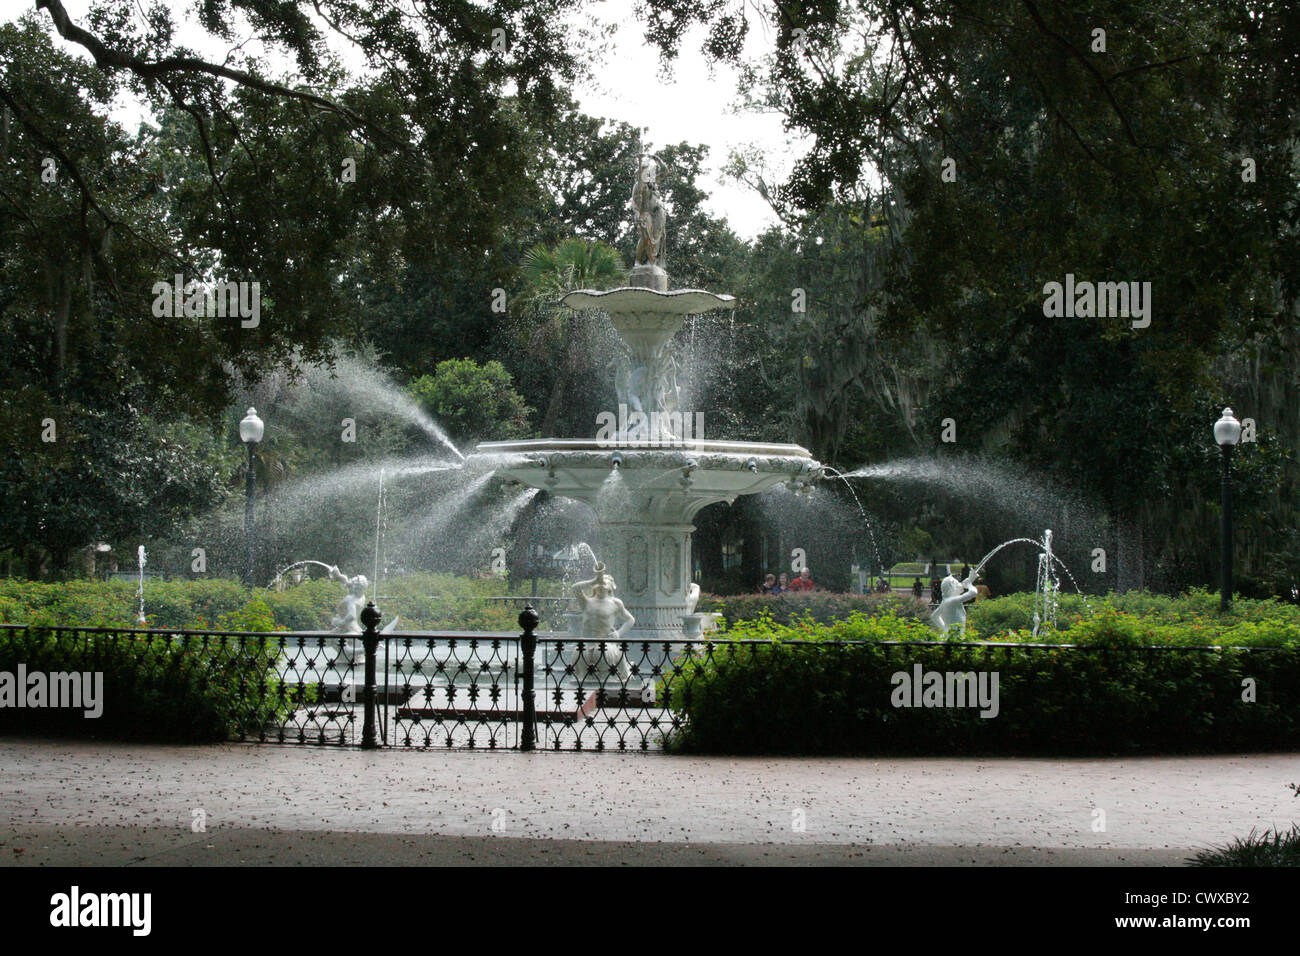 forsyth fountain water fountains savannah georgia ga historic architecture buildings marble stone statues Stock Photo